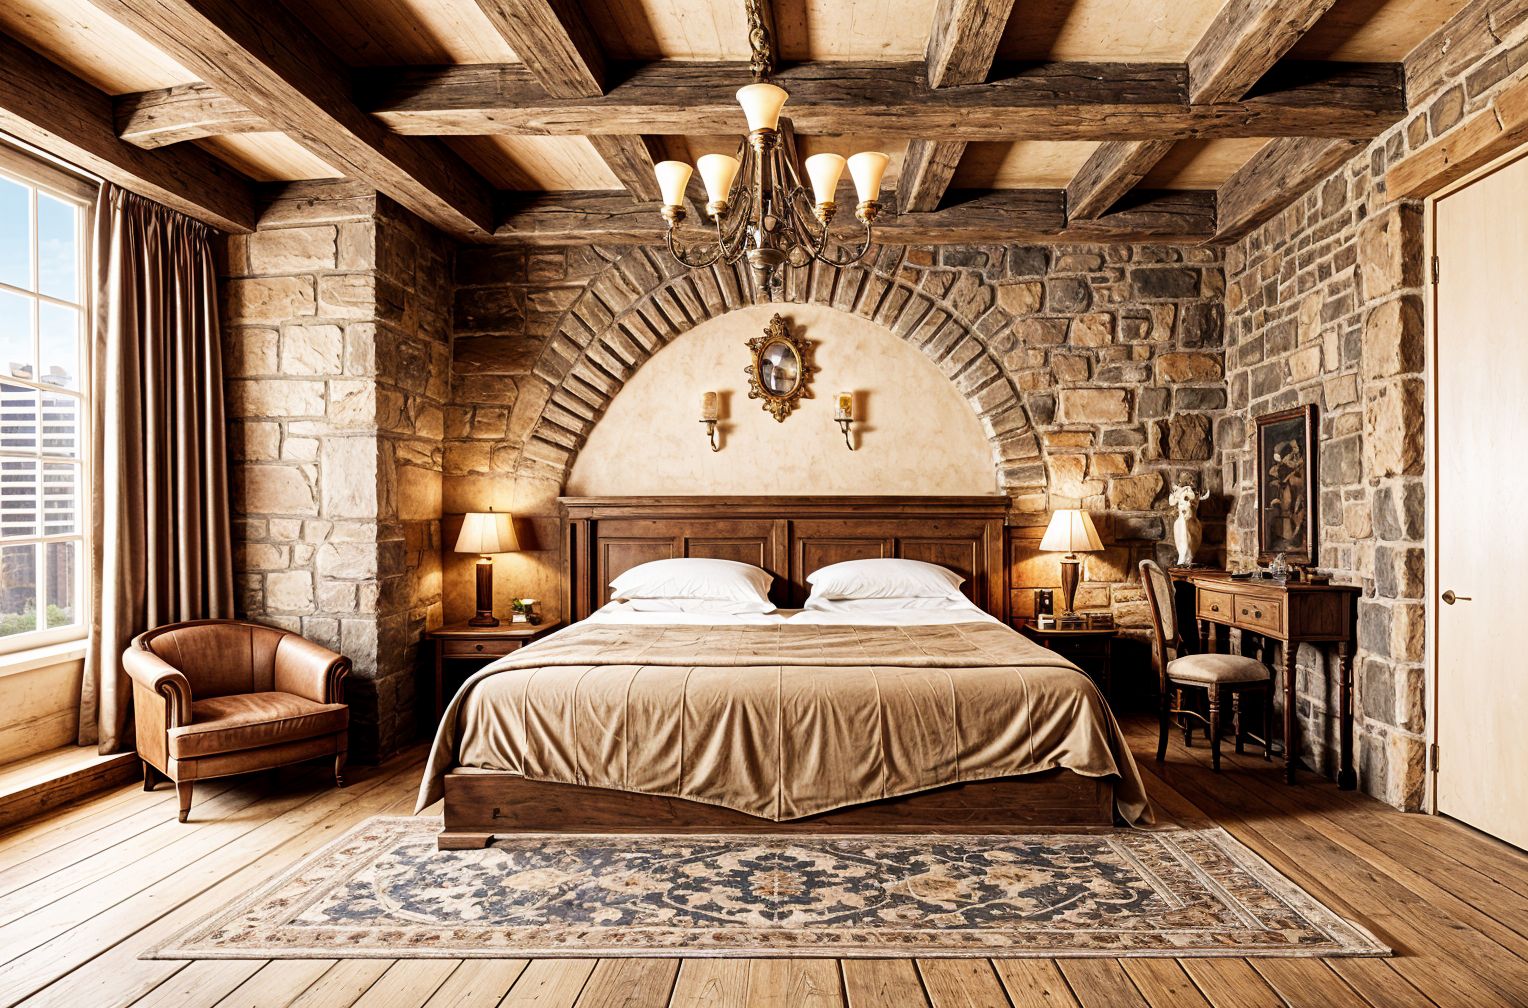 Medieval Hotel Room